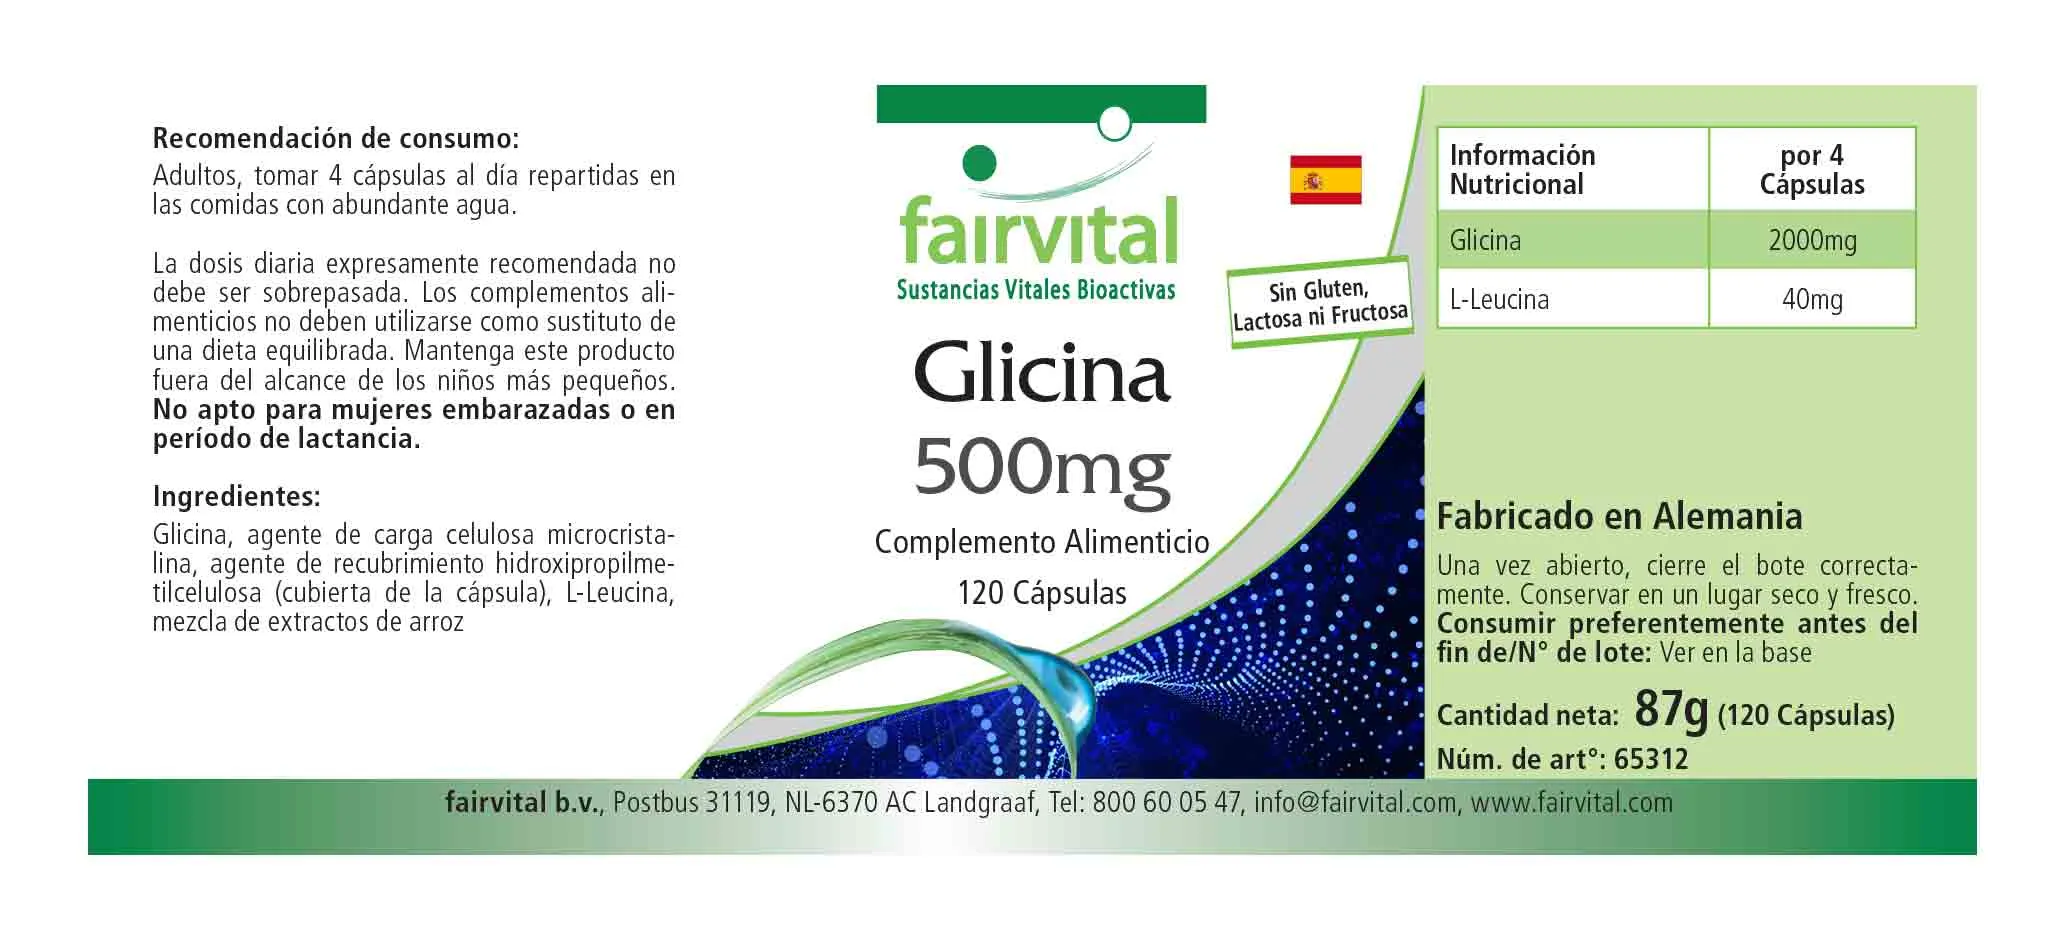 Glycine 500mg - 120 capsules